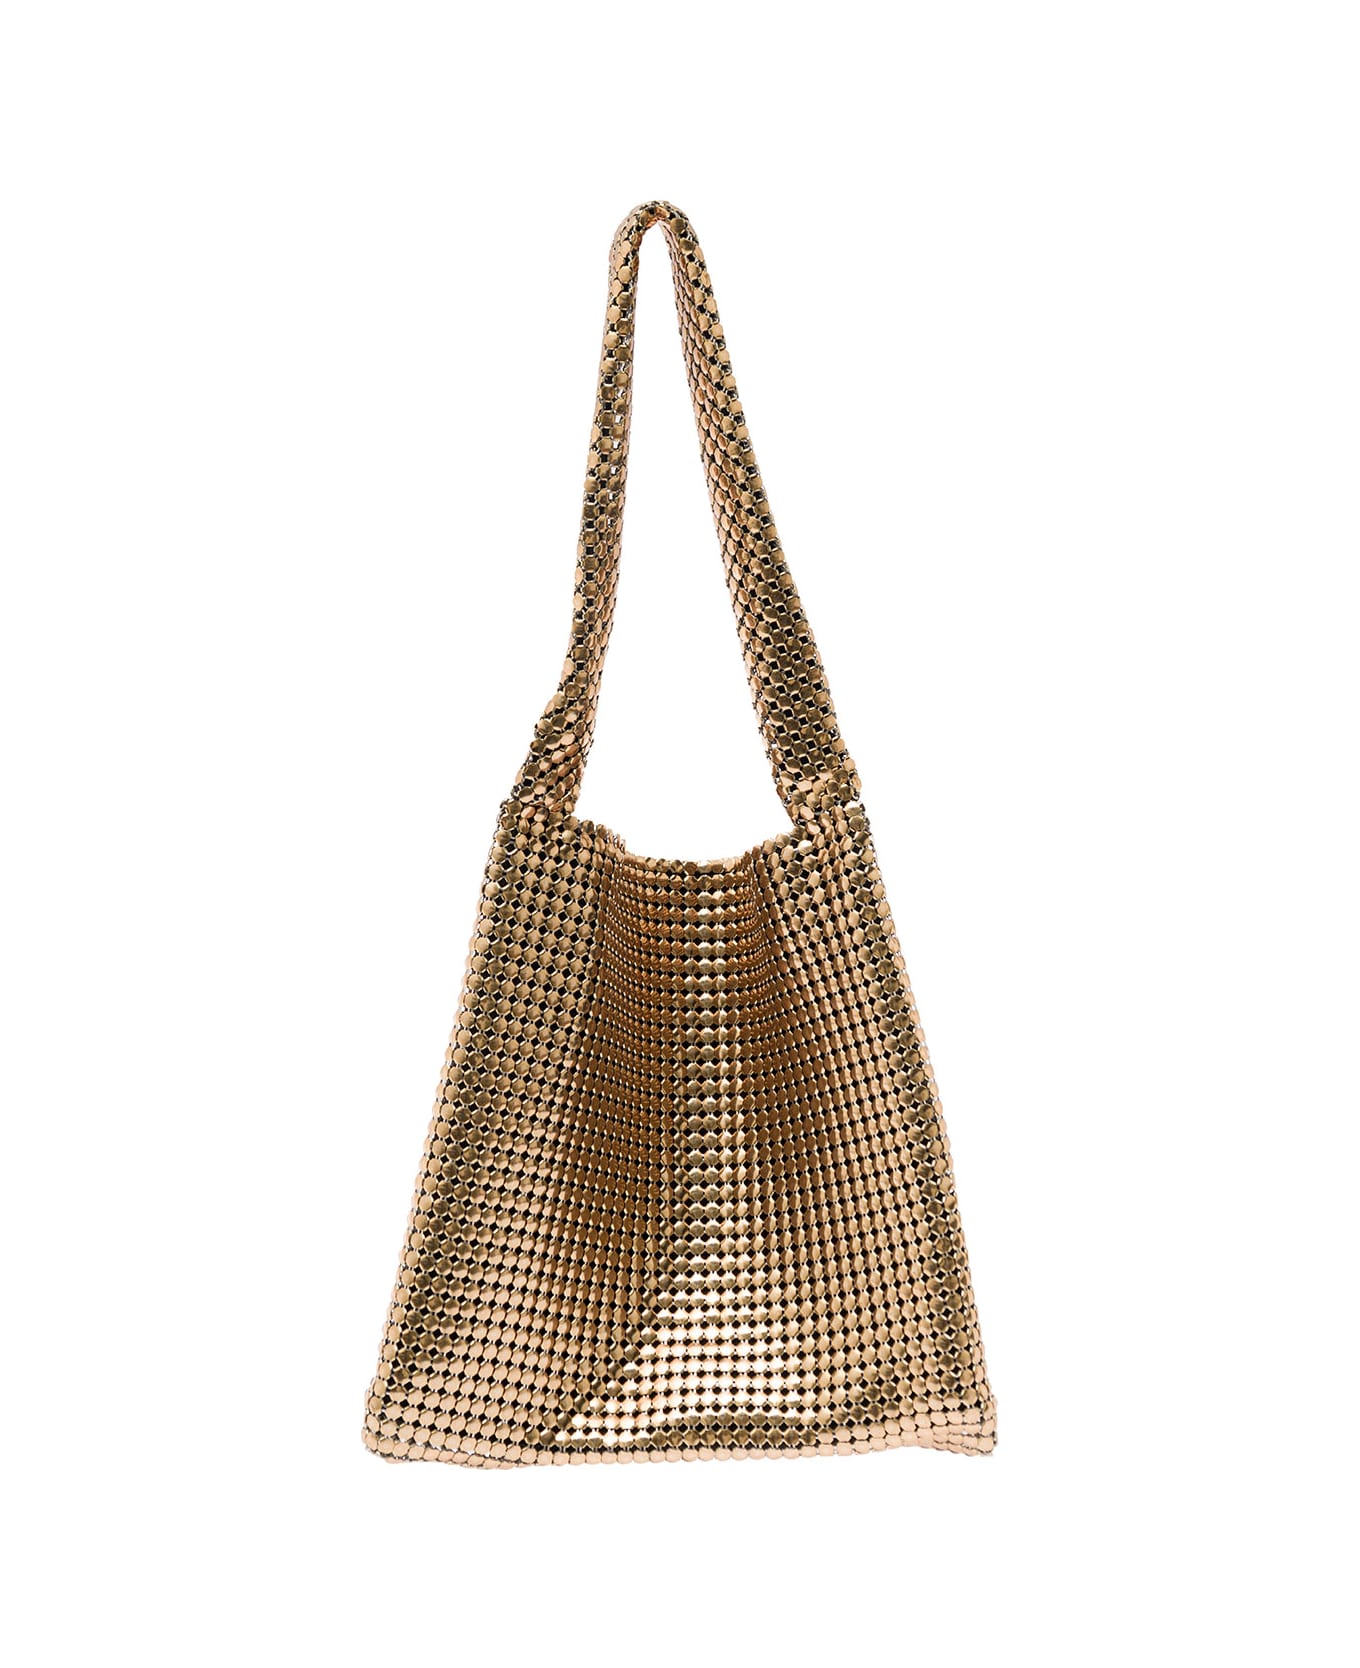 Paco Rabanne 'pixel' Gold-tone Tote Bag In Metallic Mesh Woman - Metallic